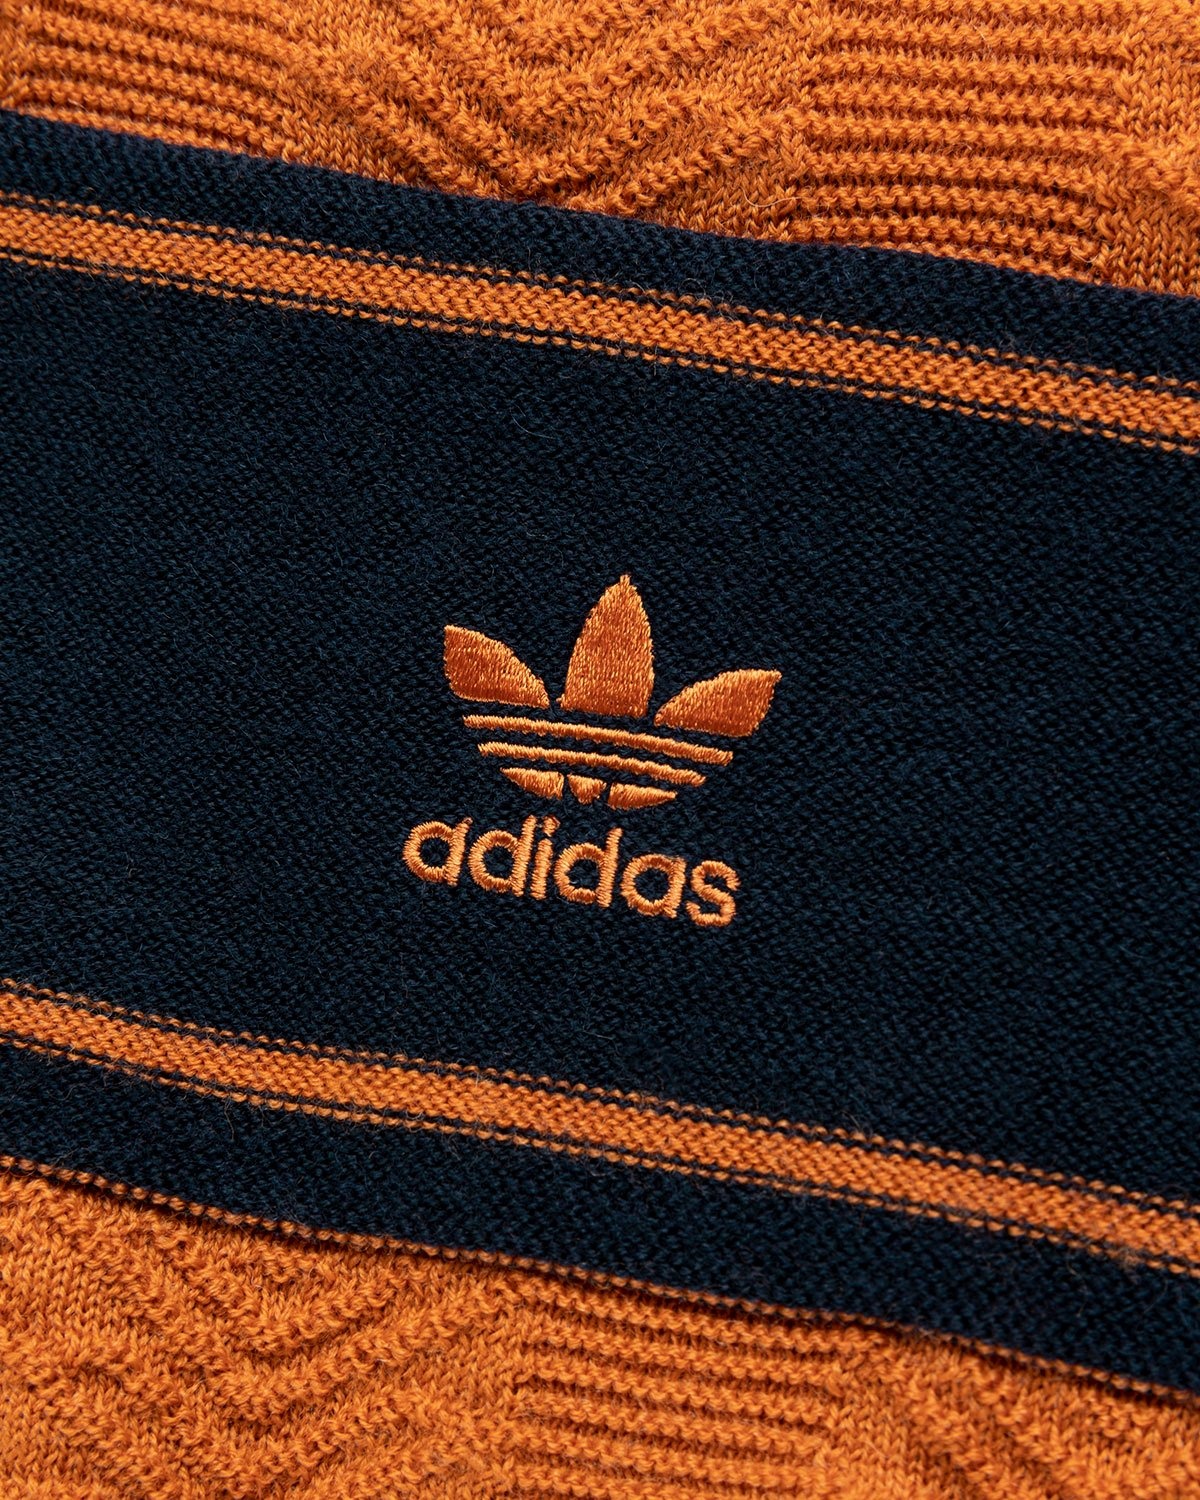 Adidas x Wales Bonner – Knit Longsleeve - V-Necks Knitwear - Orange - Image 4